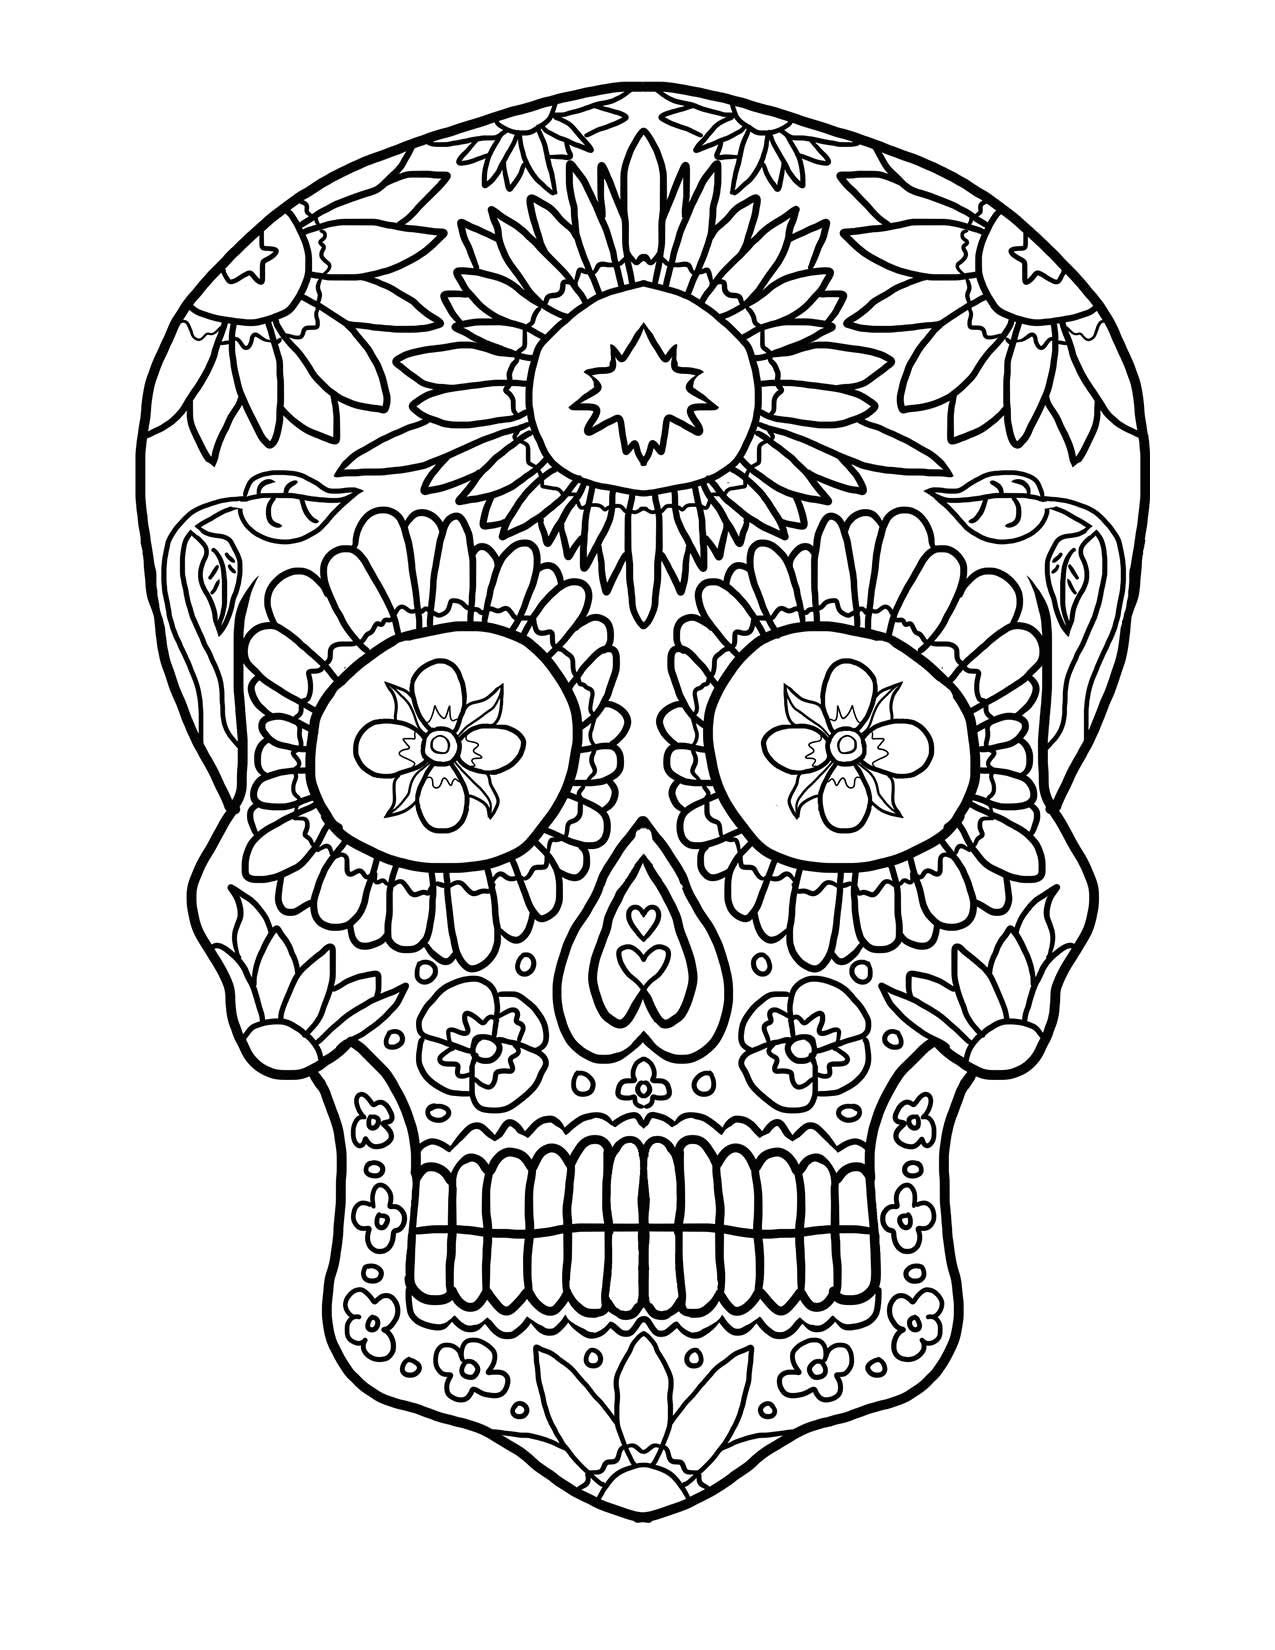 Mandala Skull Coloring Pages at GetColorings.com | Free printable ...